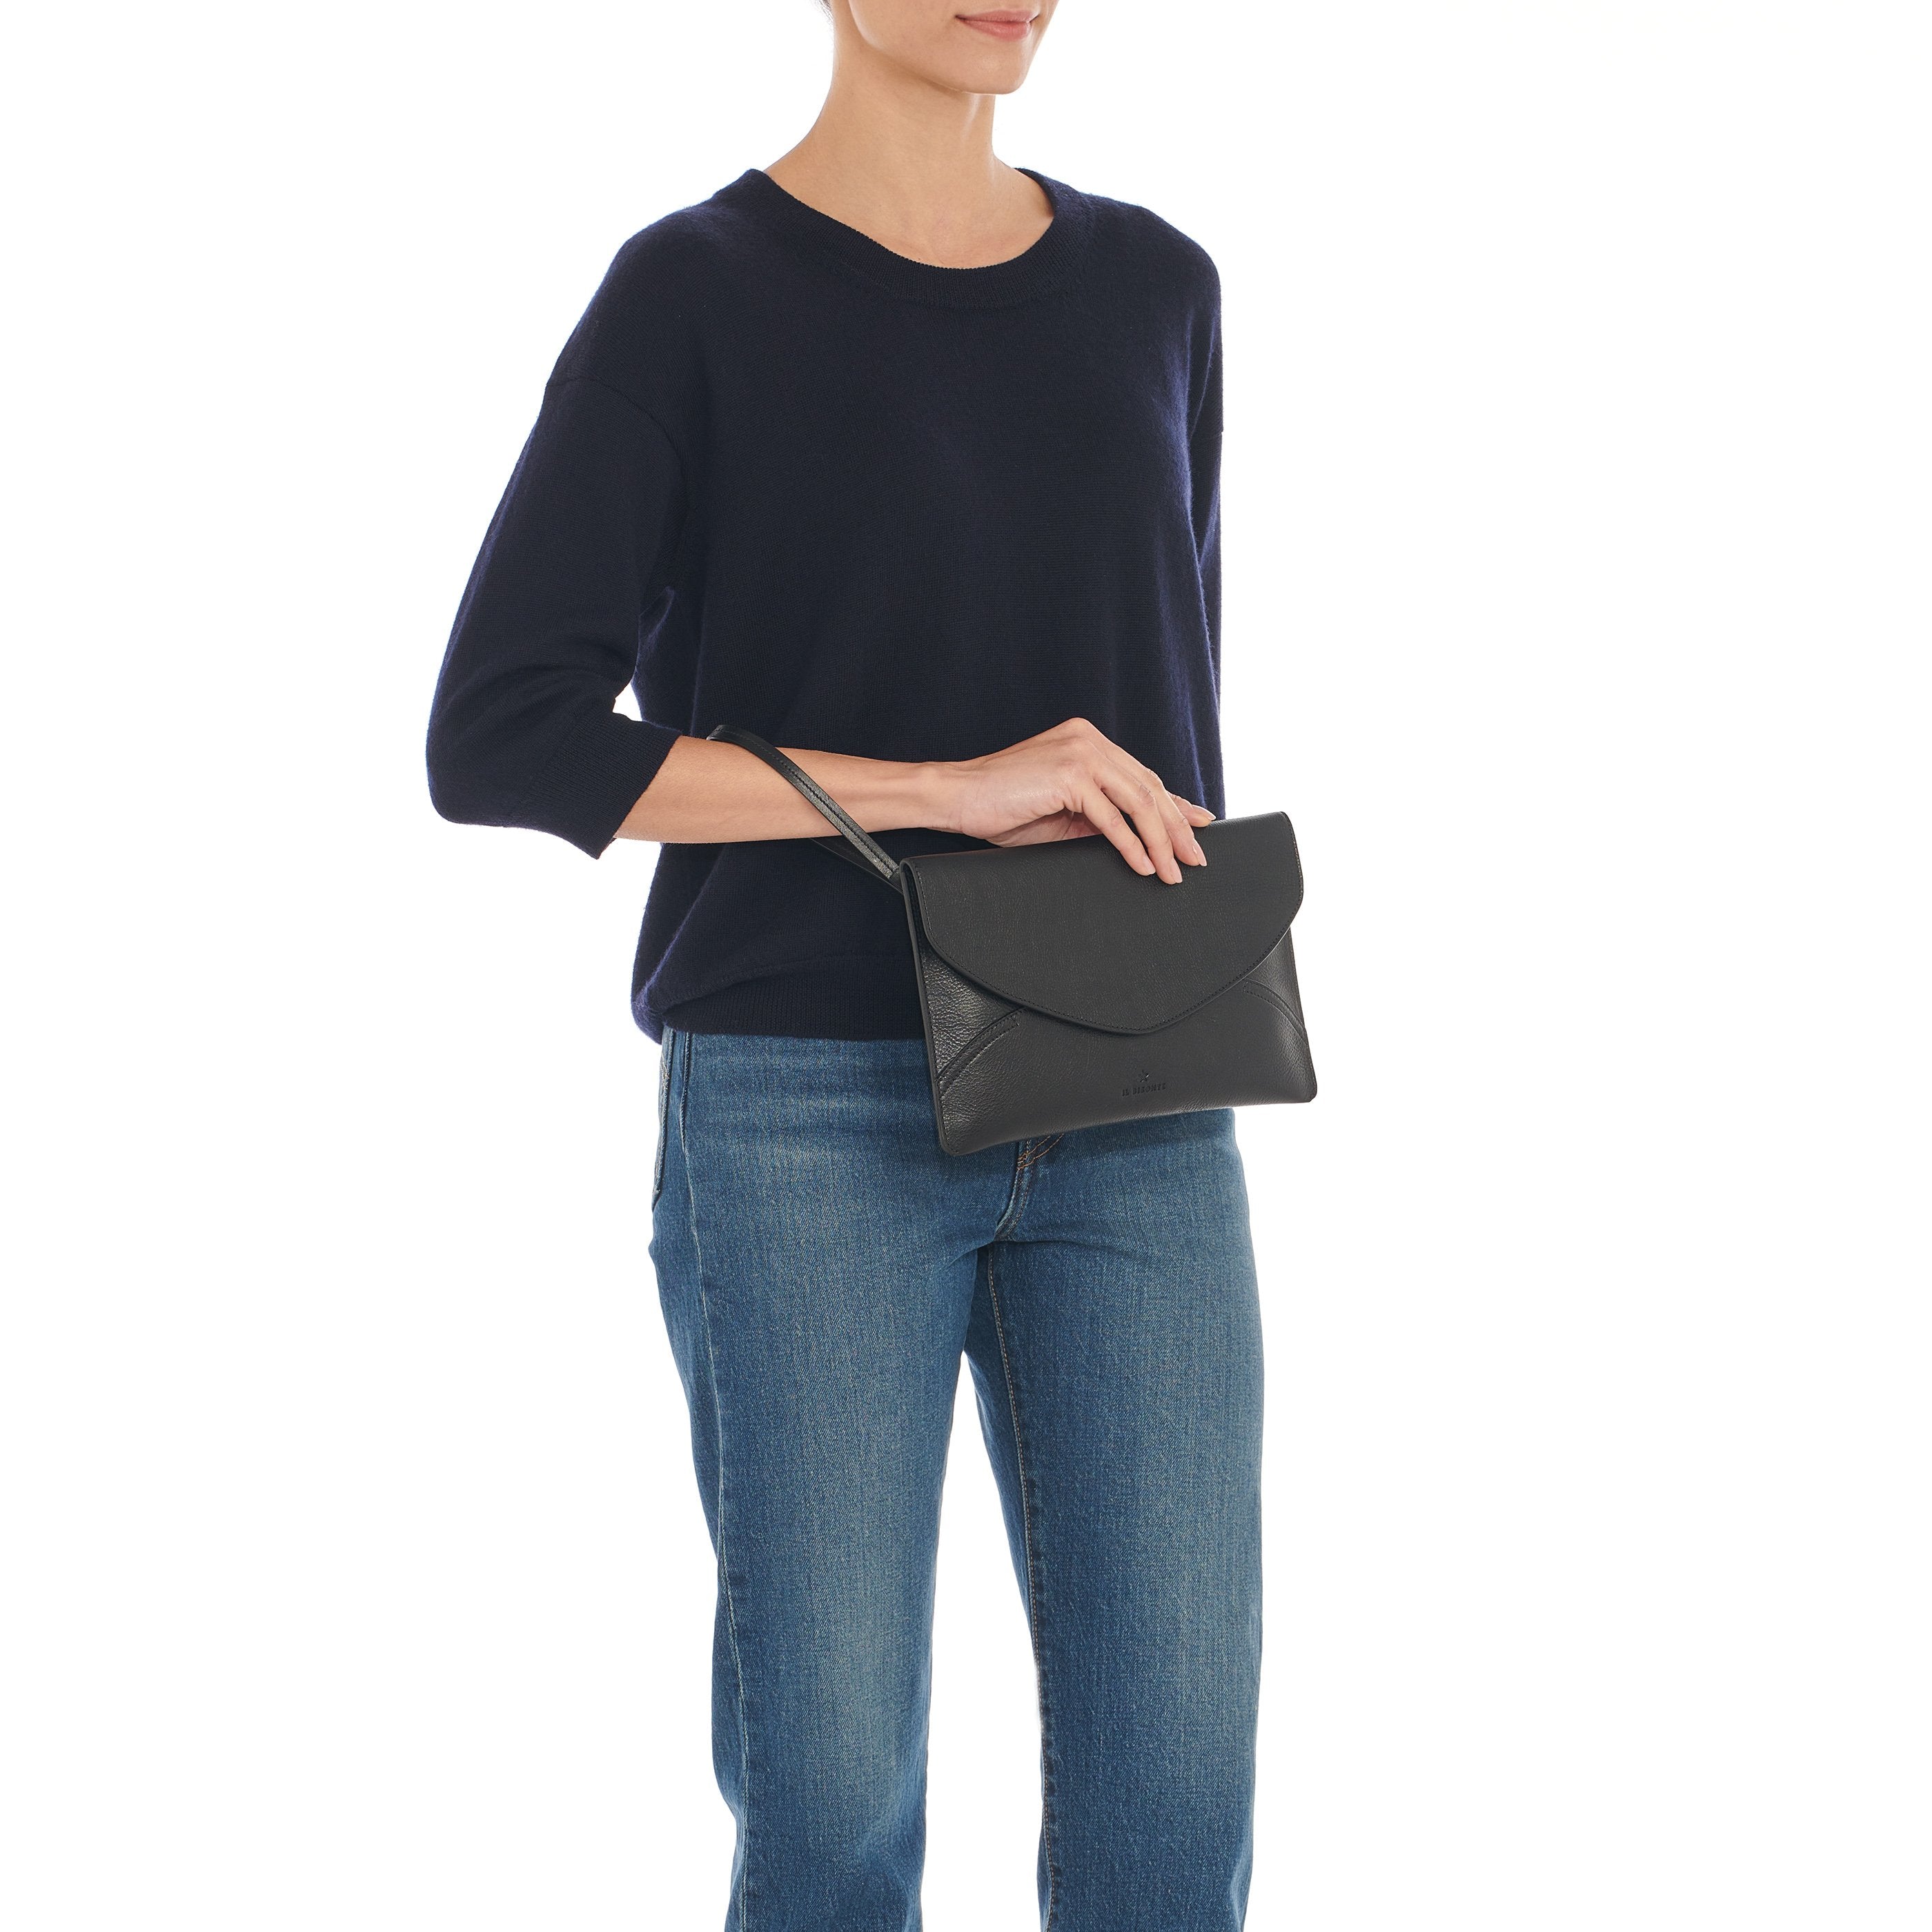 Esperia | Women's clutch bag in leather color black